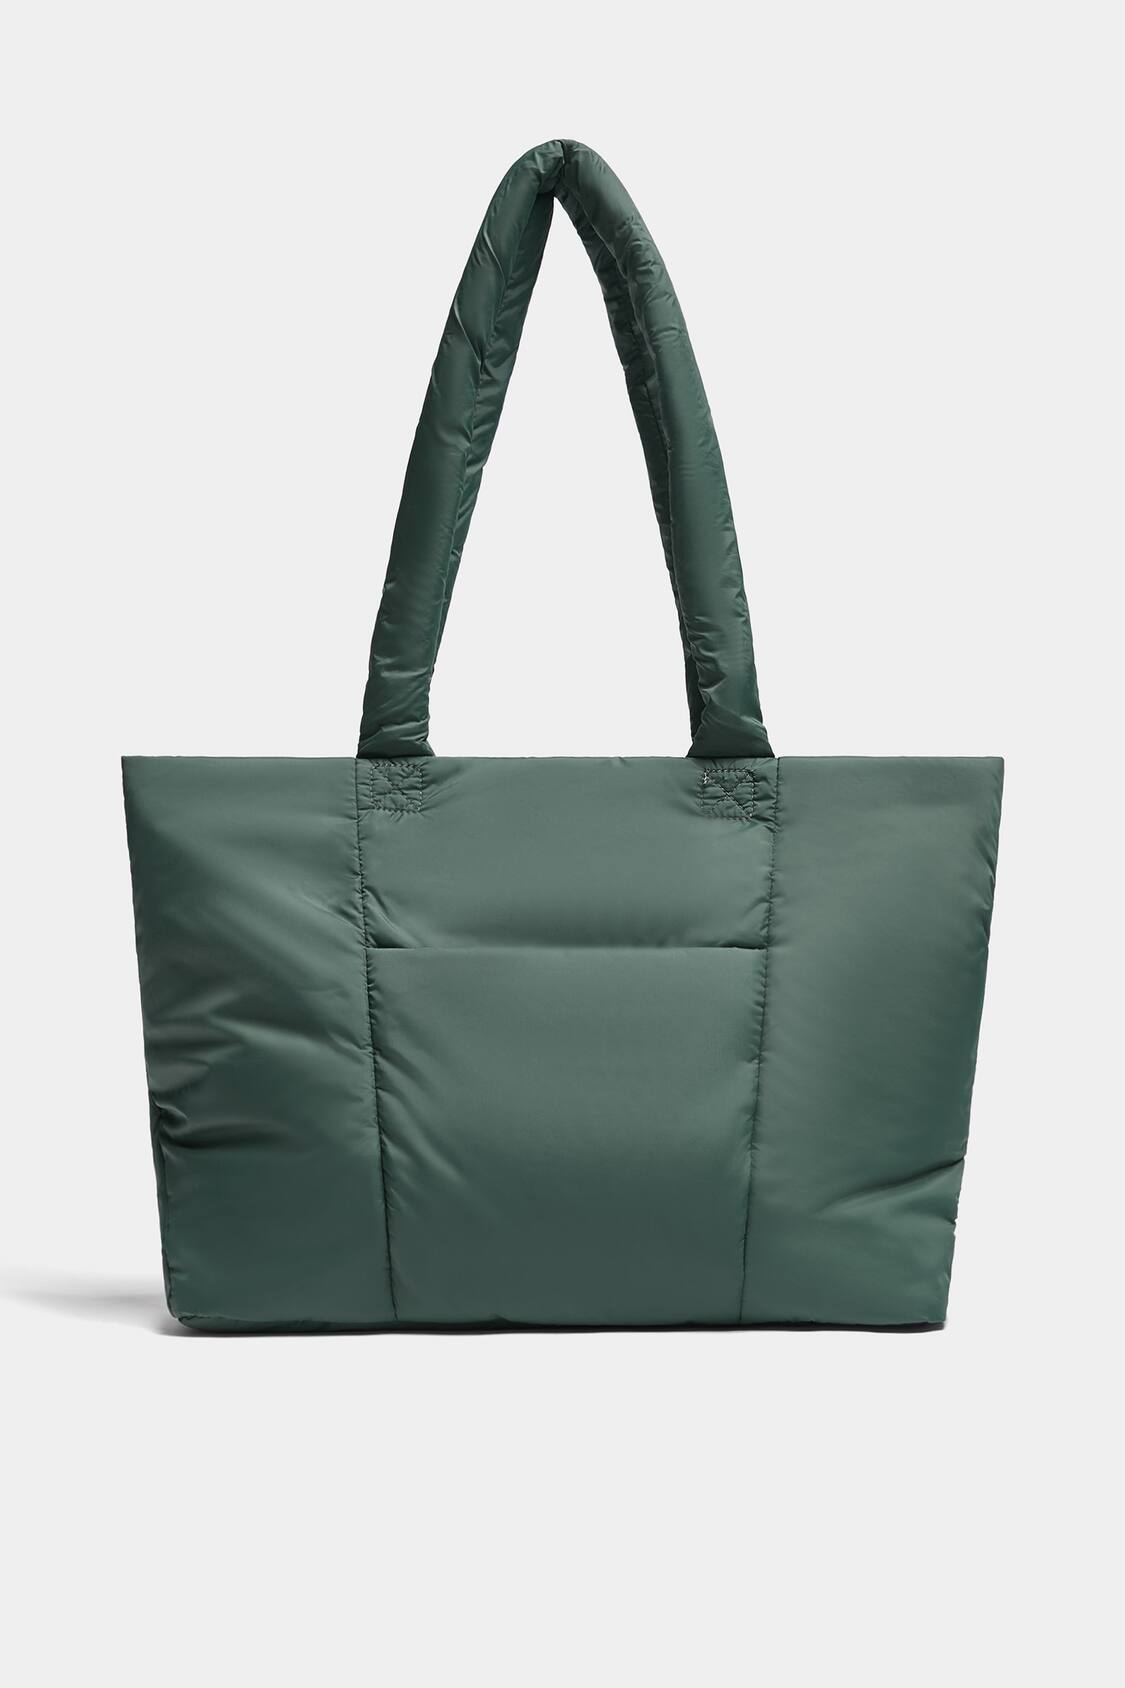 Trying this TikTok trend (branded paper bag DIY into a handbag